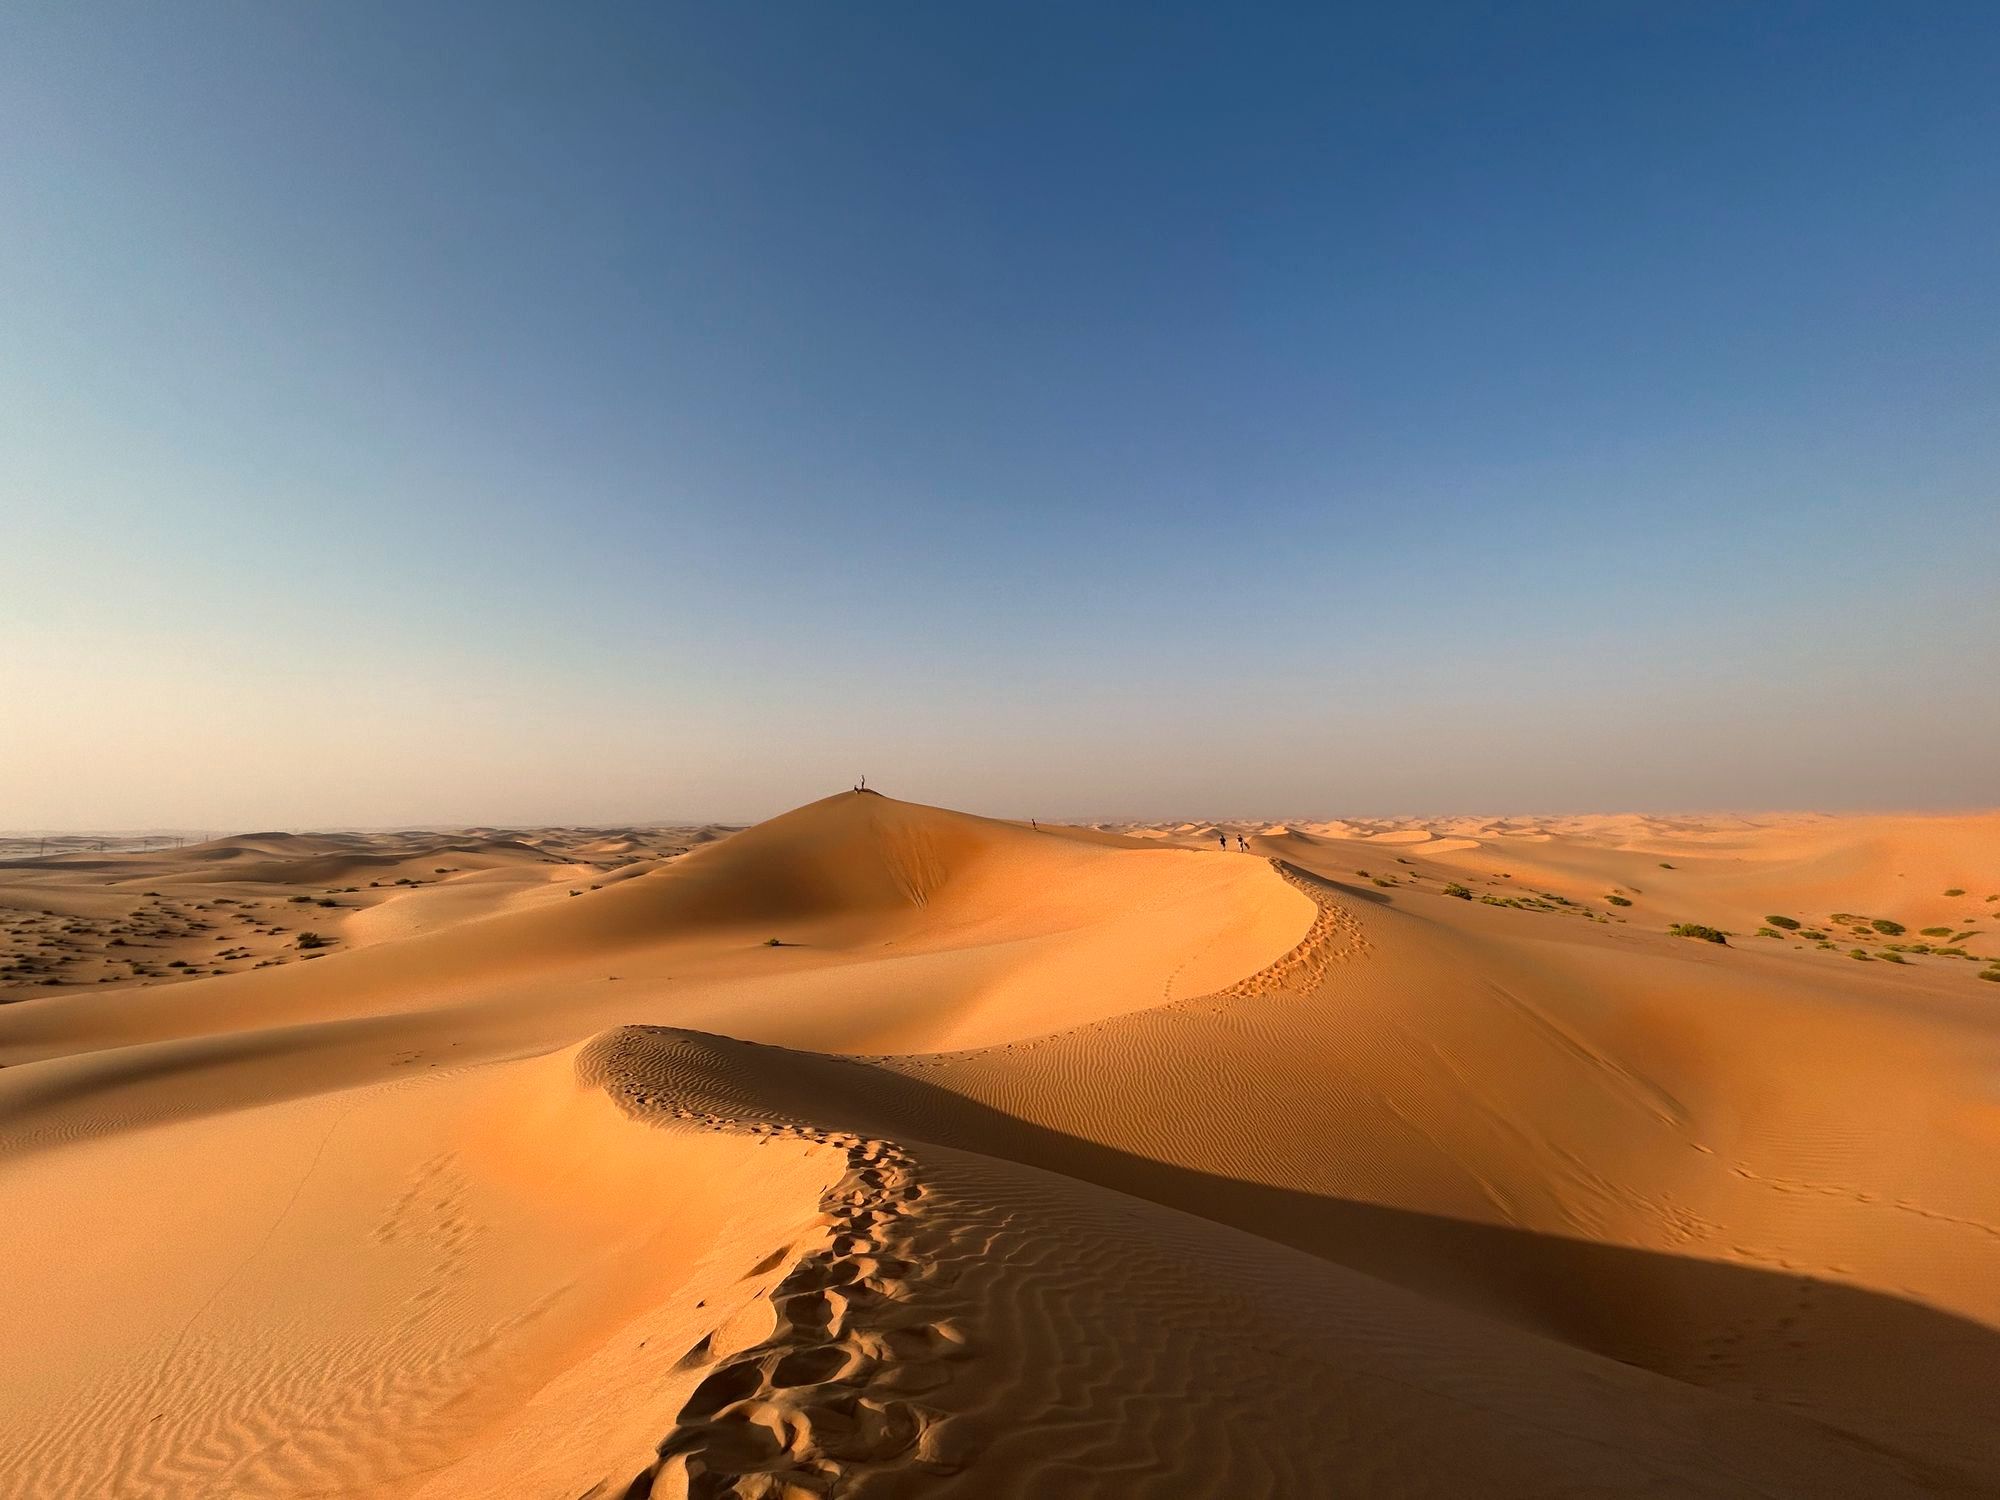 Productivity with AI: The Empty Quarter Desert